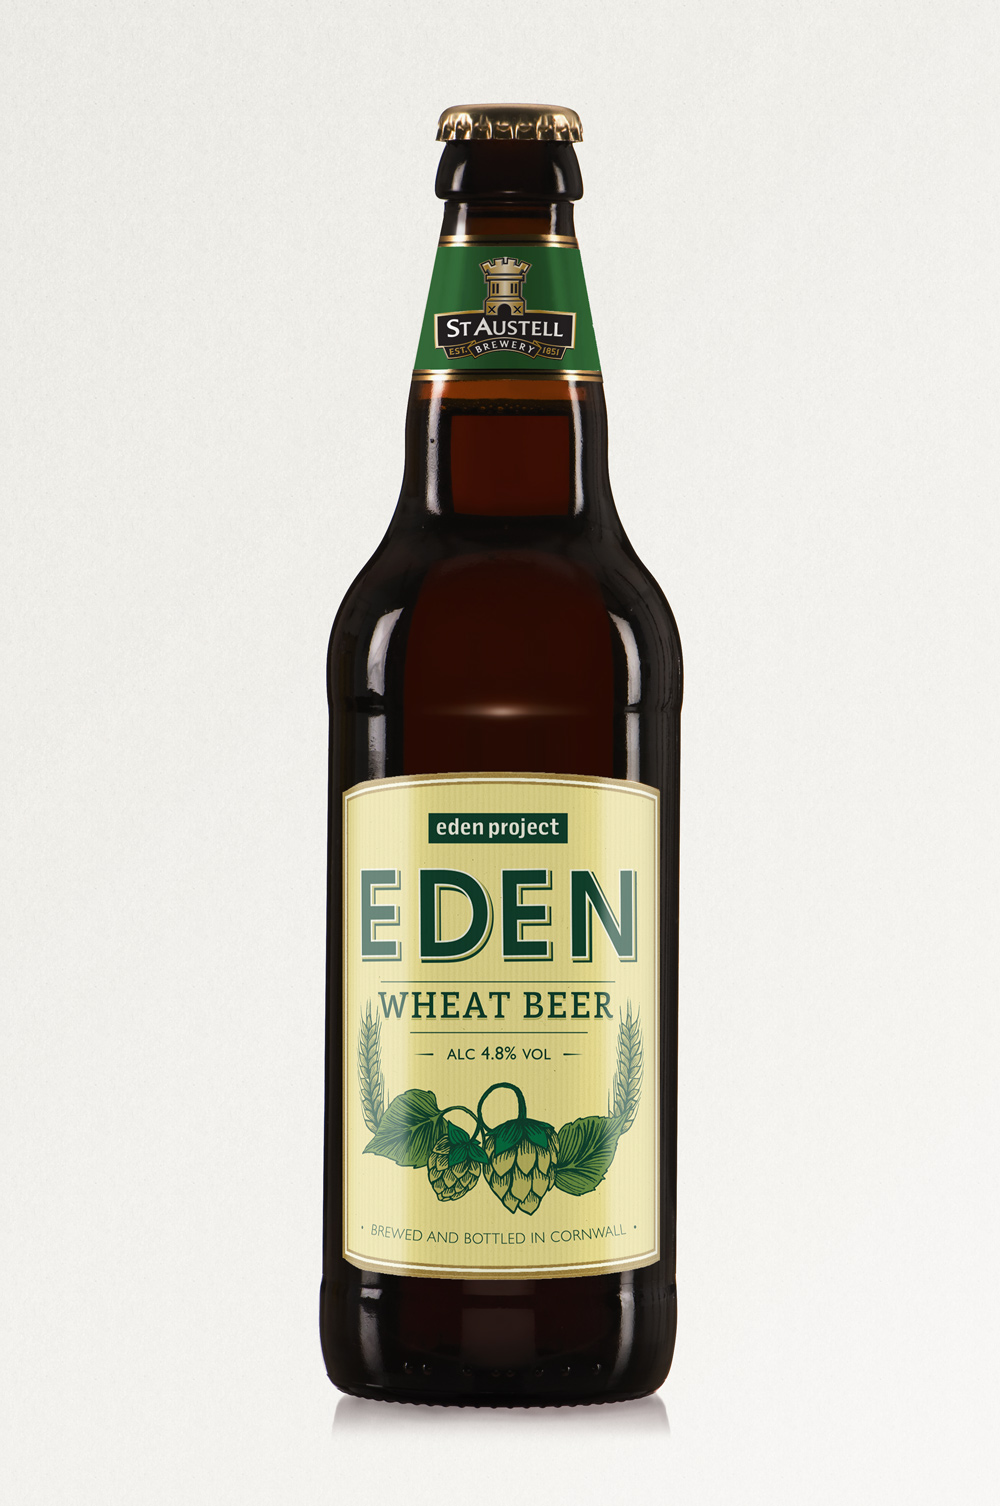 EDEN IPA, St Austell Brewery, wheat beer bottle label design